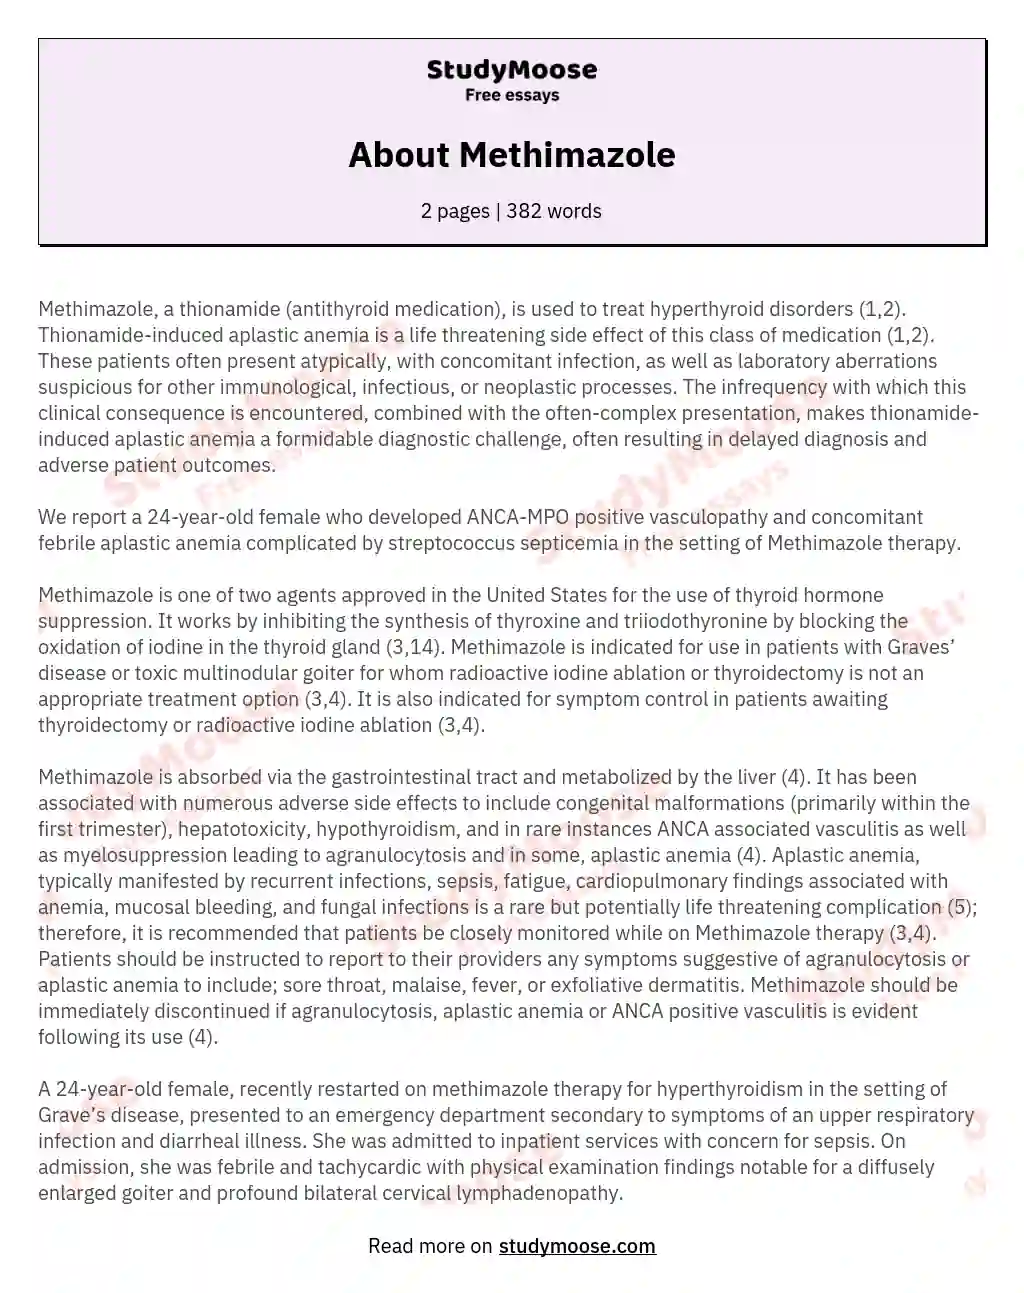 About Methimazole essay